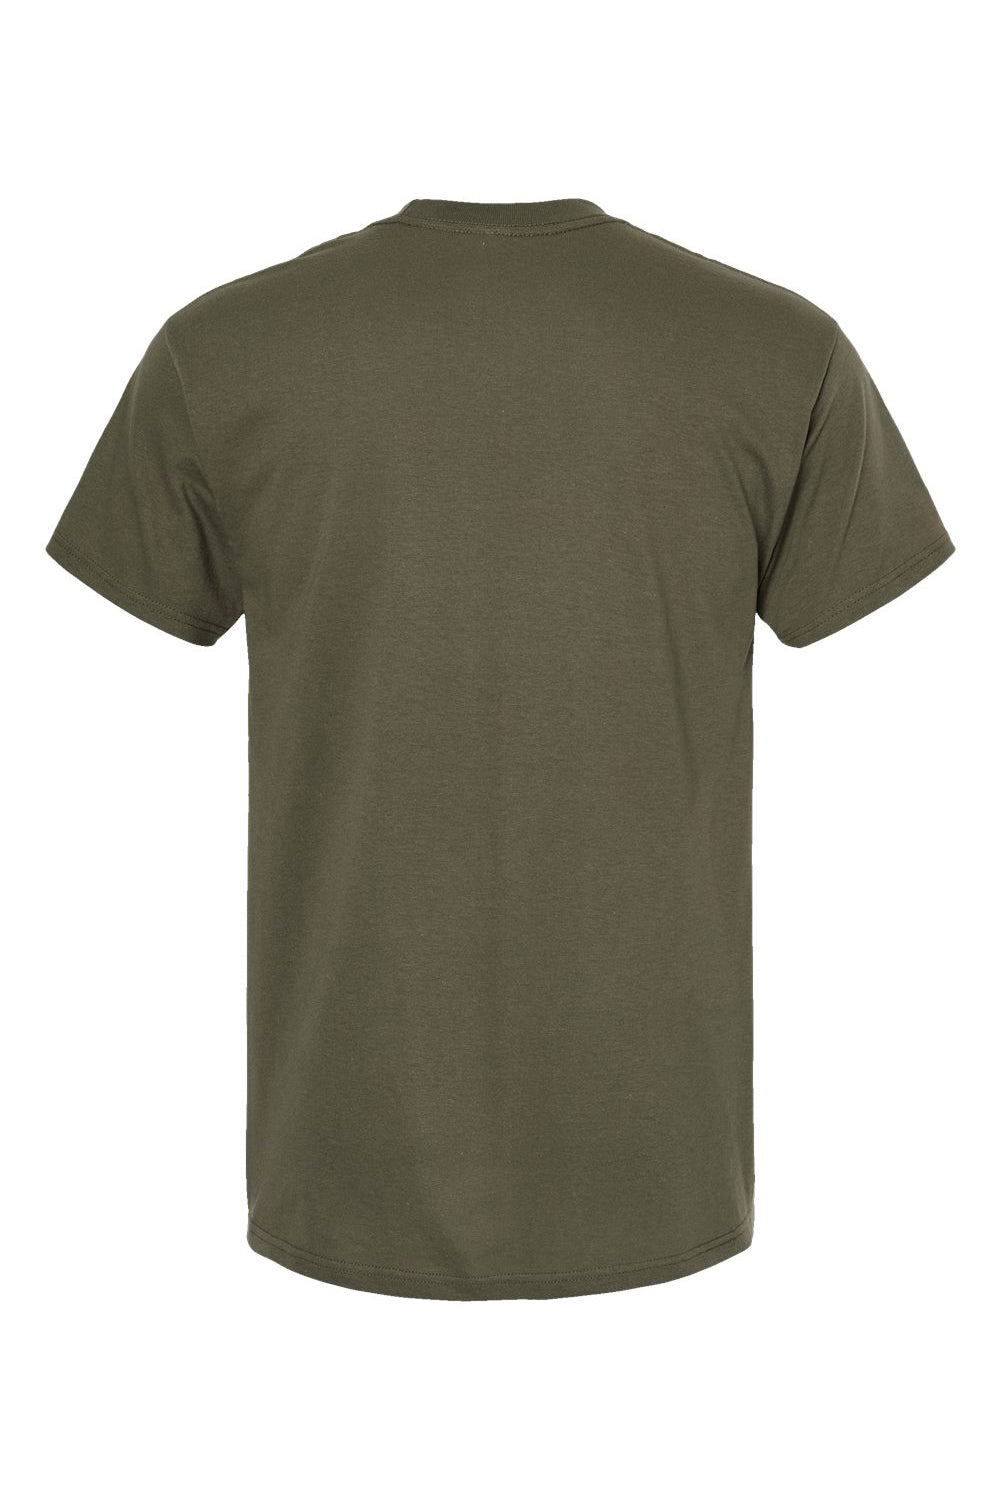 M&O 4800 Mens Gold Soft Touch Short Sleeve Crewneck T-Shirt Military Green Flat Back